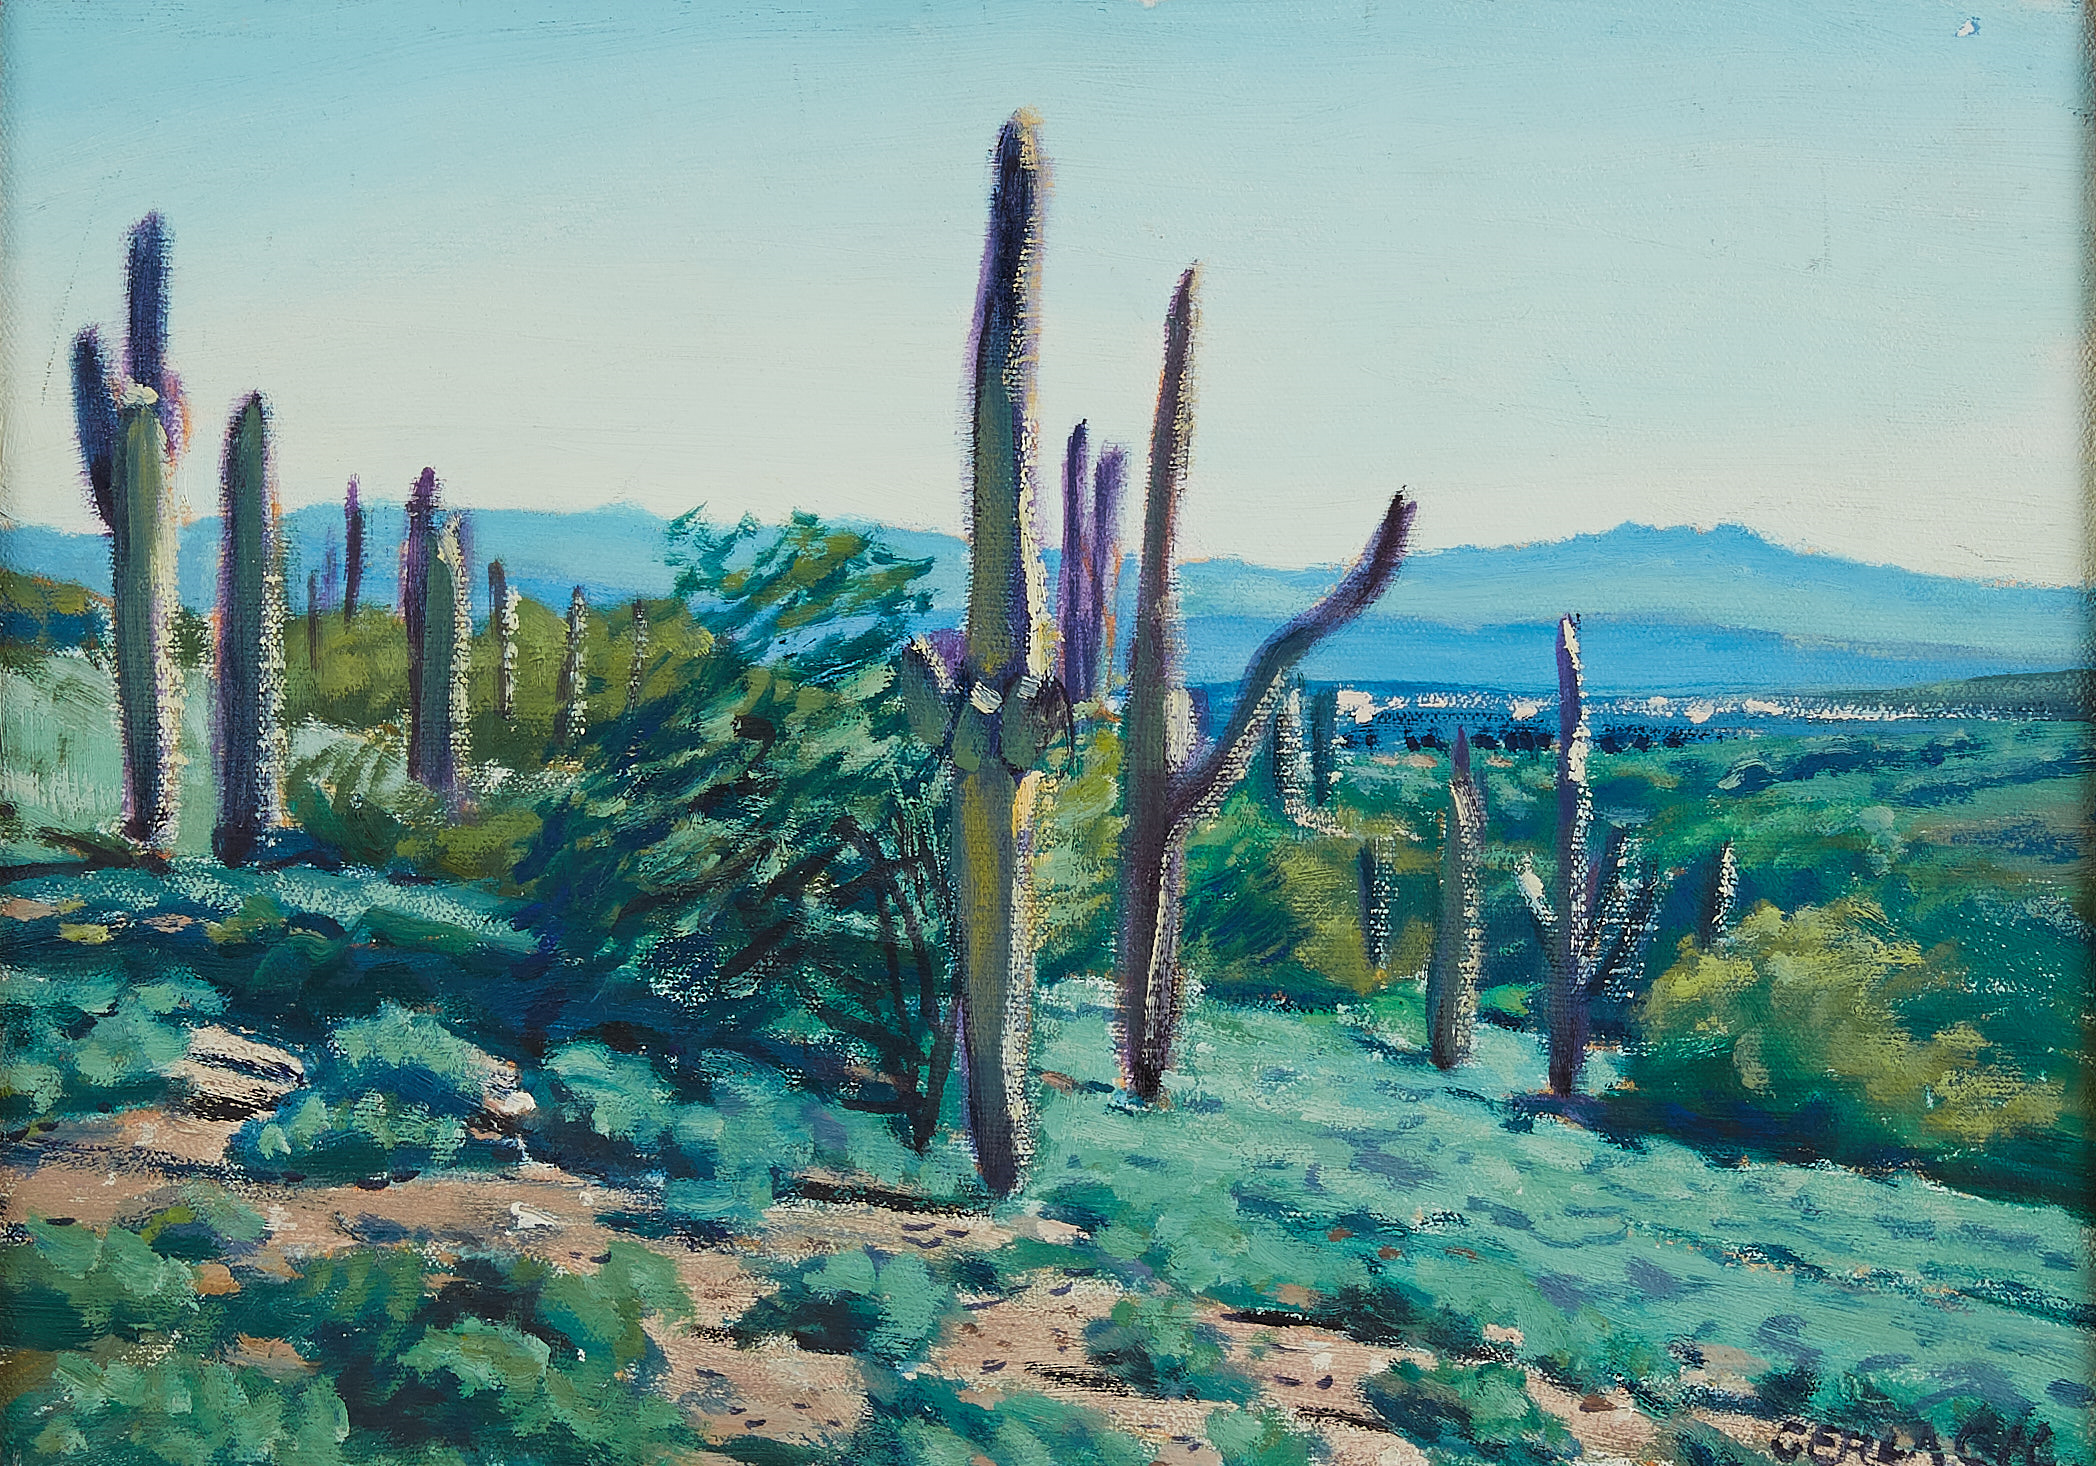 Lot 076: Christopher Gerlach "Saguaro Landscape" Oil on Canvas